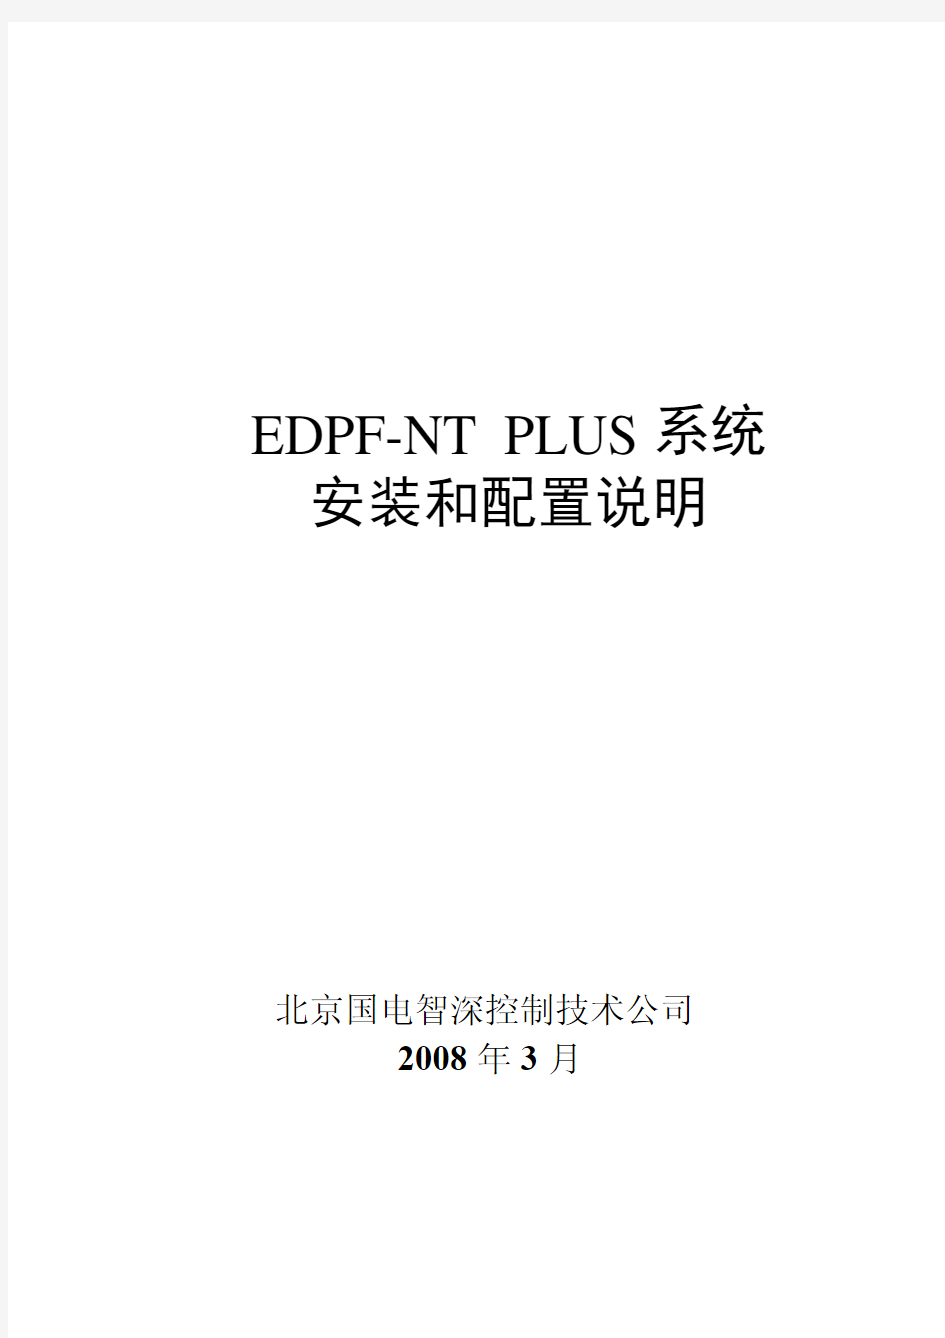 EDPFNT系统安装和配置说明